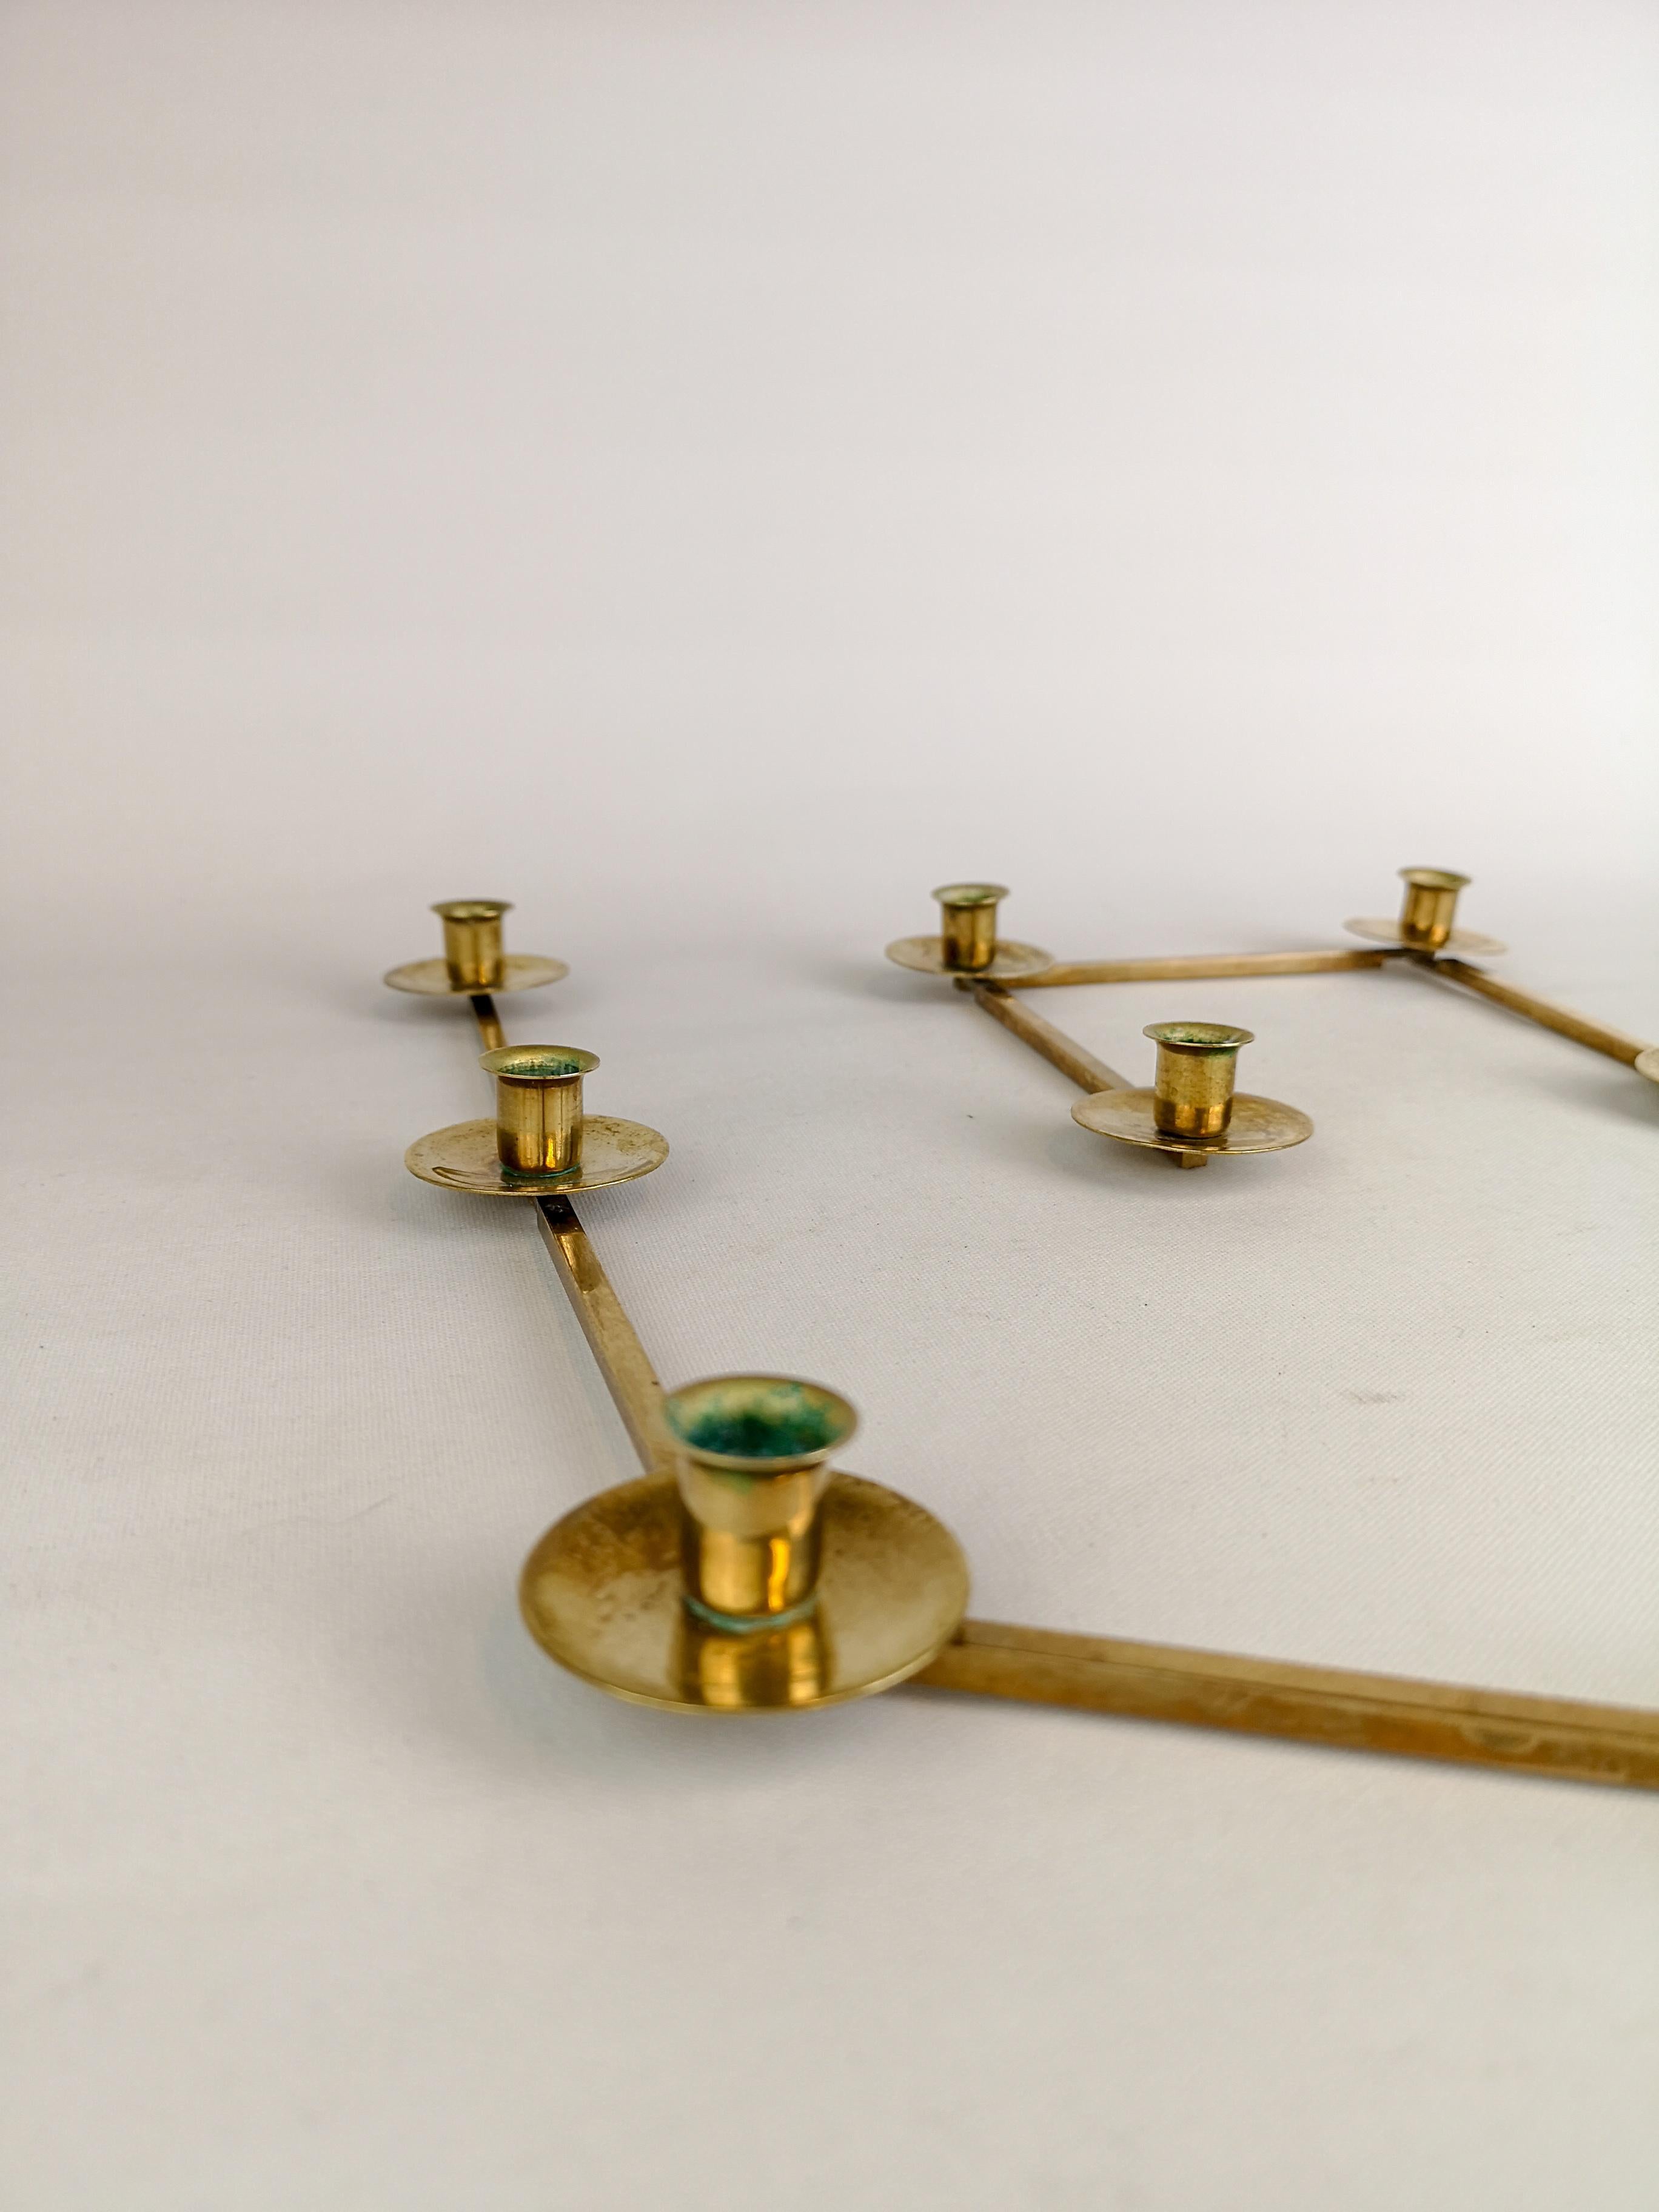 Swedish Midcentury Modern Candleholder in Brass, Margareta Slingan, Sweden, 1950s For Sale